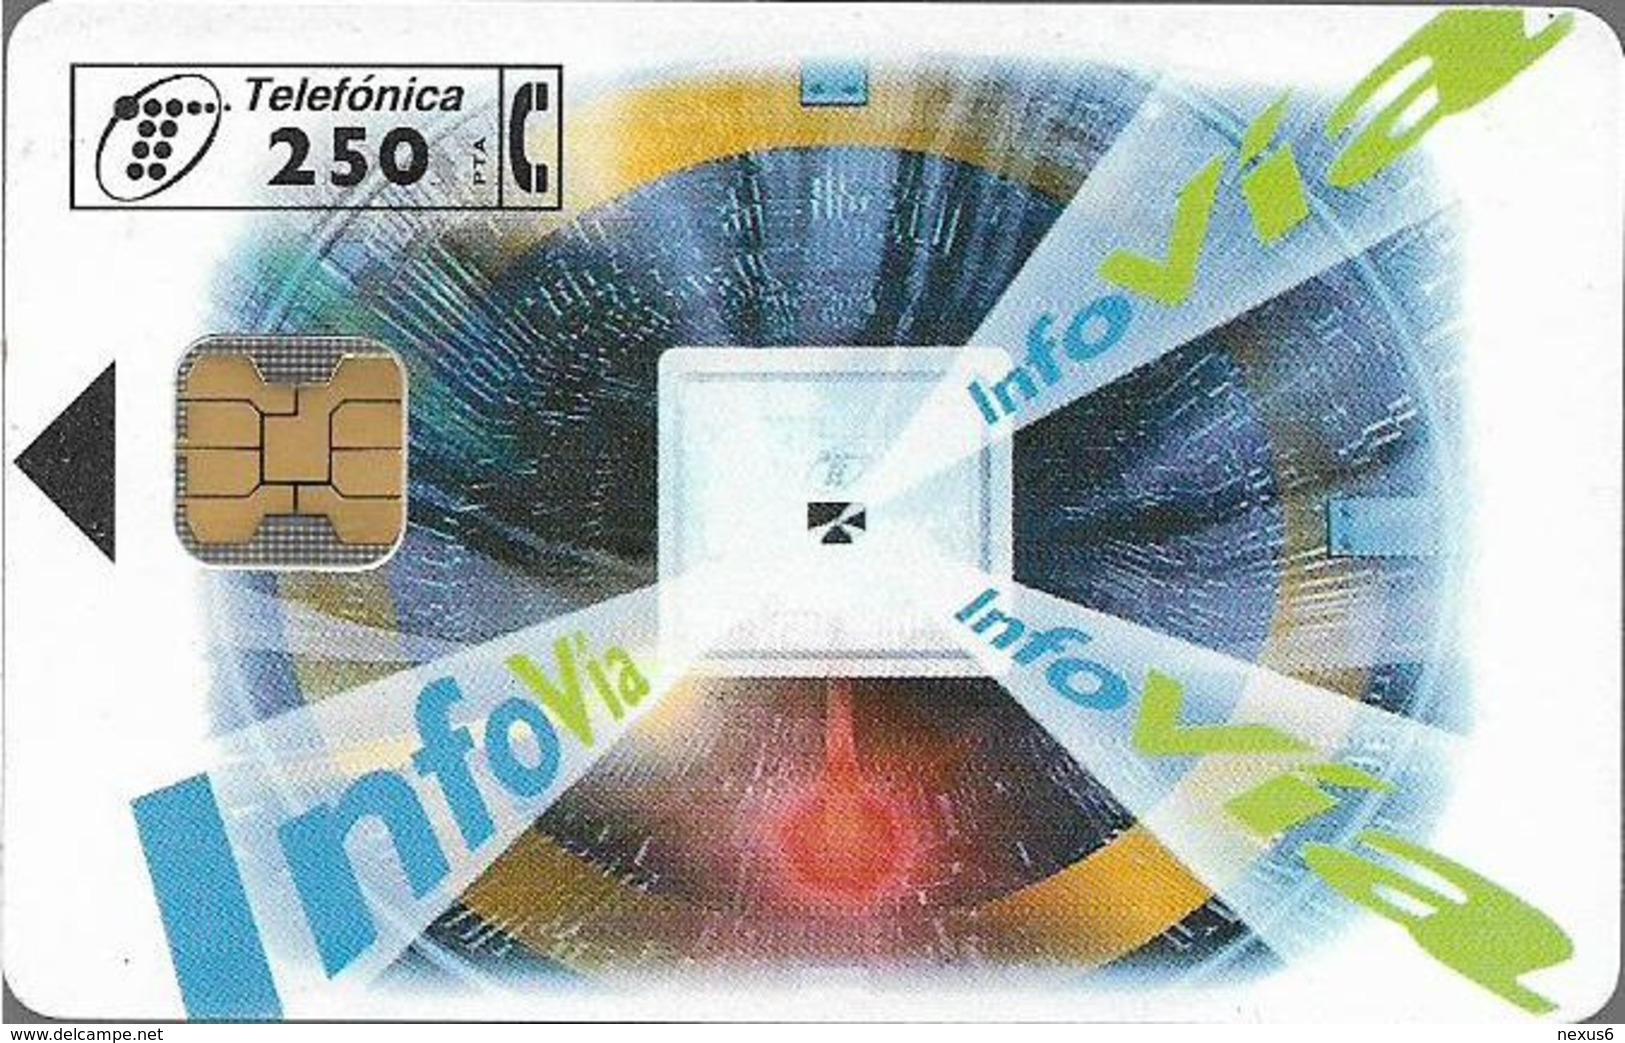 Spain - Telefónica - Simo Tci-95 - G-010 - 11.1995, 250PTA, 7.000ex, Mint (check Photos!) - Danke-Schön-Karten